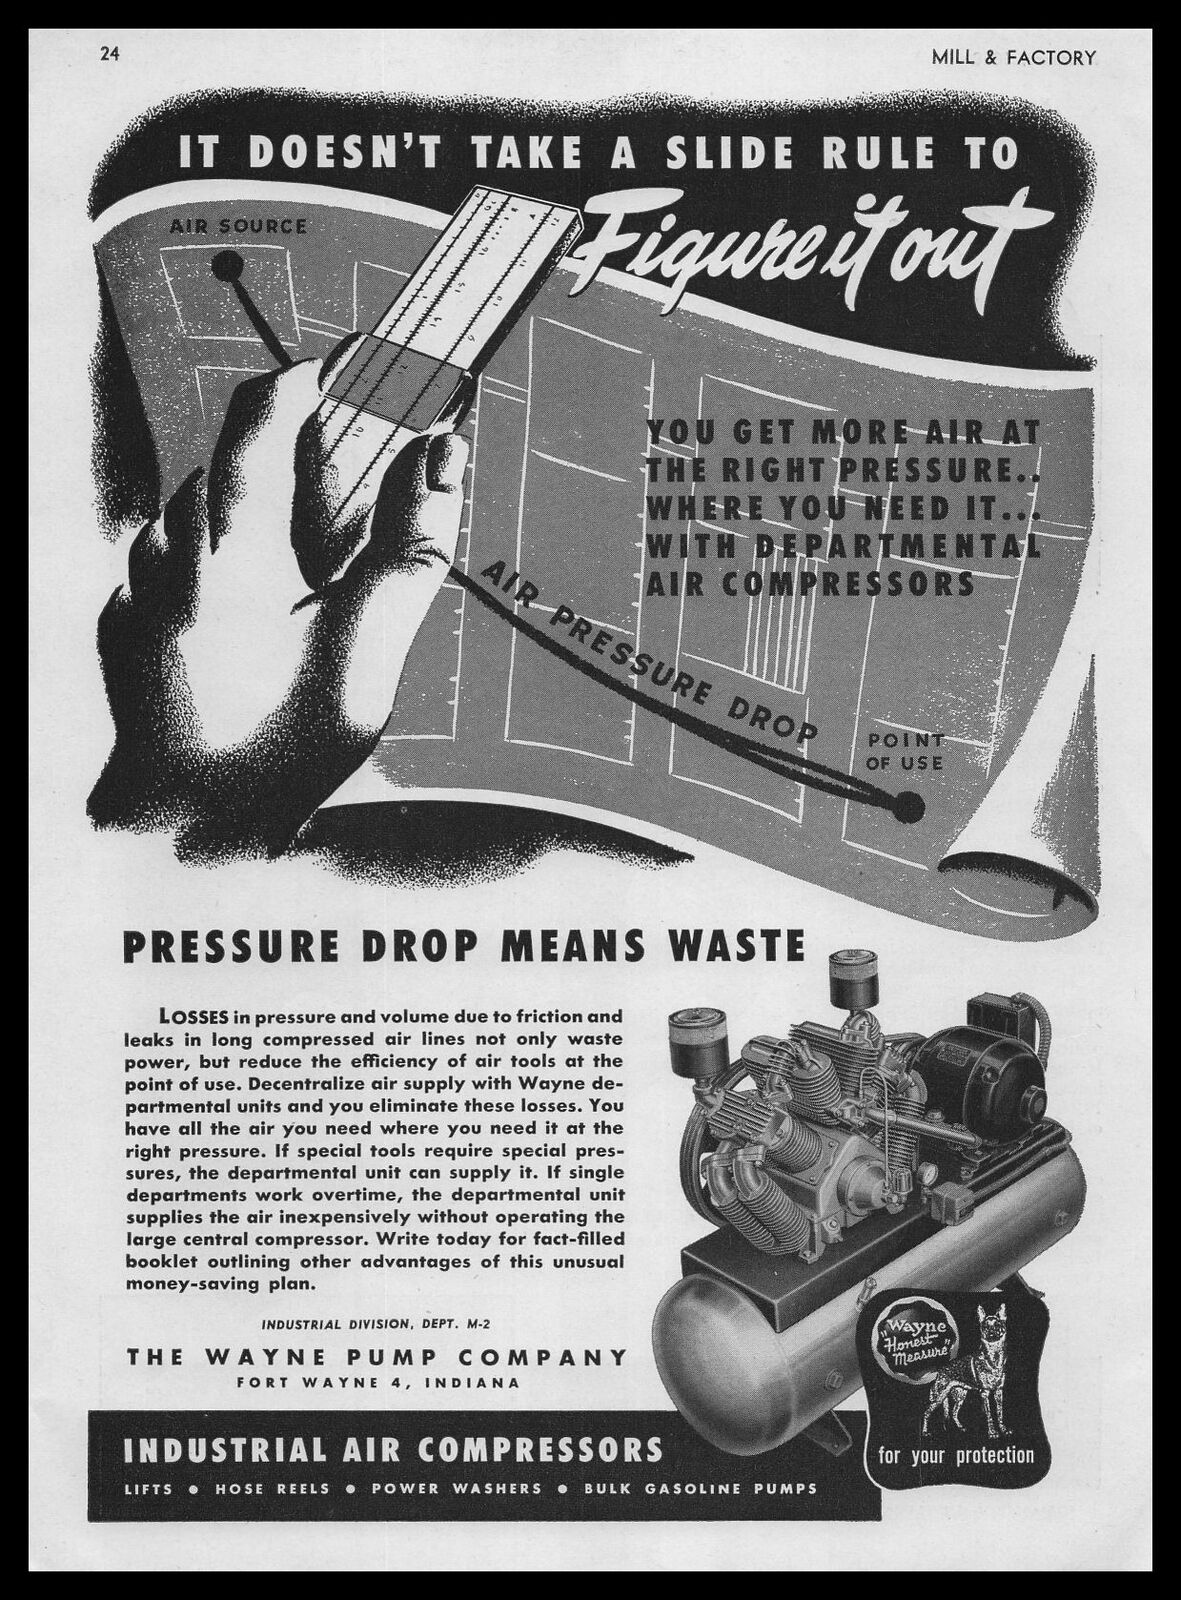 1948 Wayne Pump Company Fort Wayne Indiana Industrial Air Compressors Print Ad